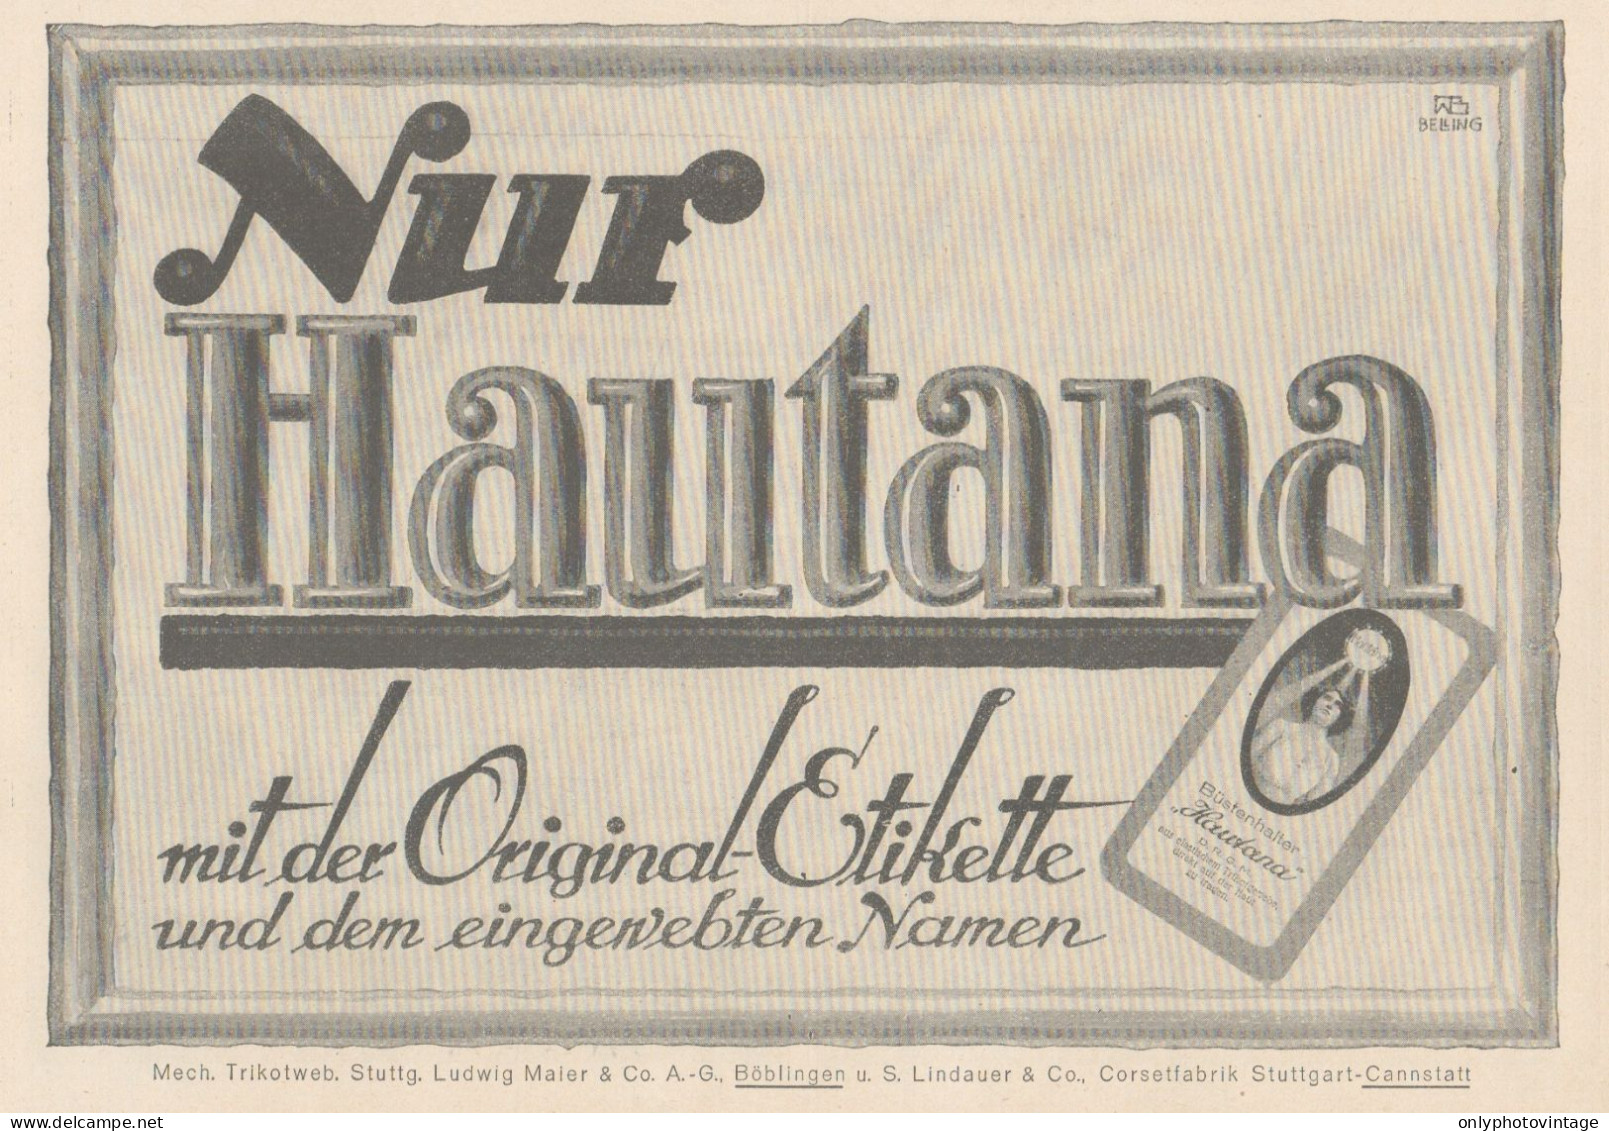 HAUTANA - Pubblicità D'epoca - 1927 Old Advertising - Reclame